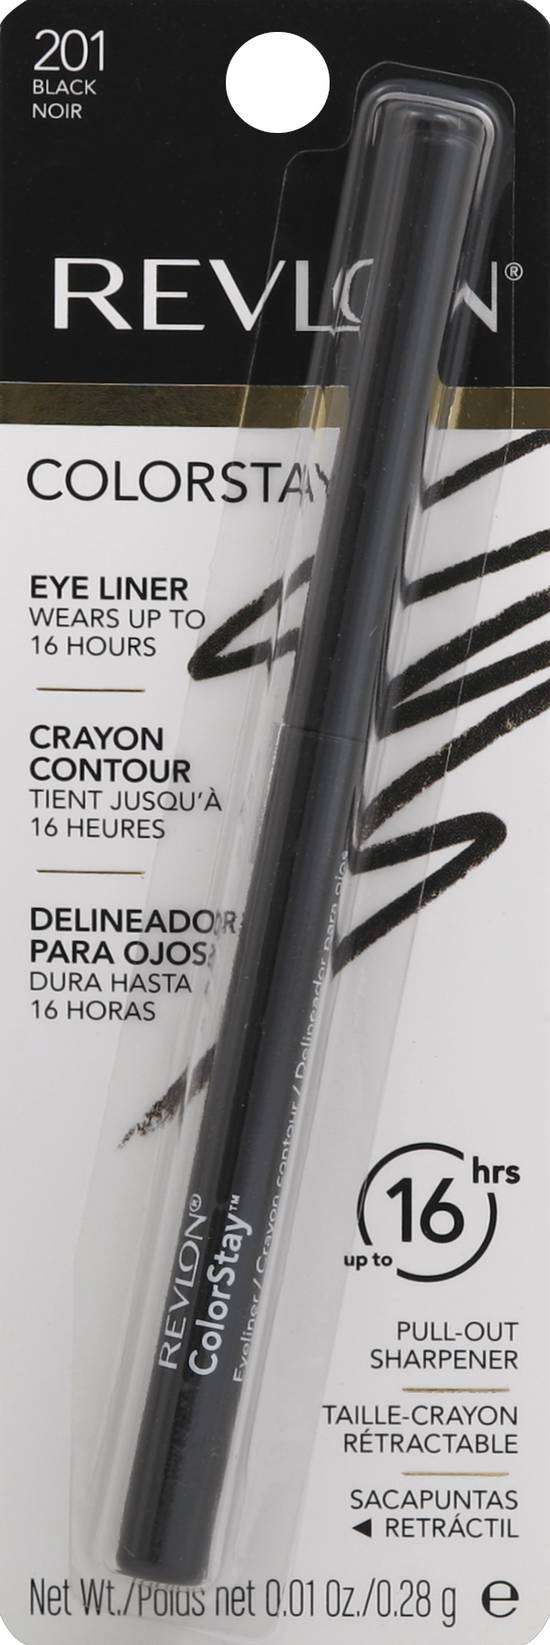 Revlon 201 Black Colorstay Eyeliner